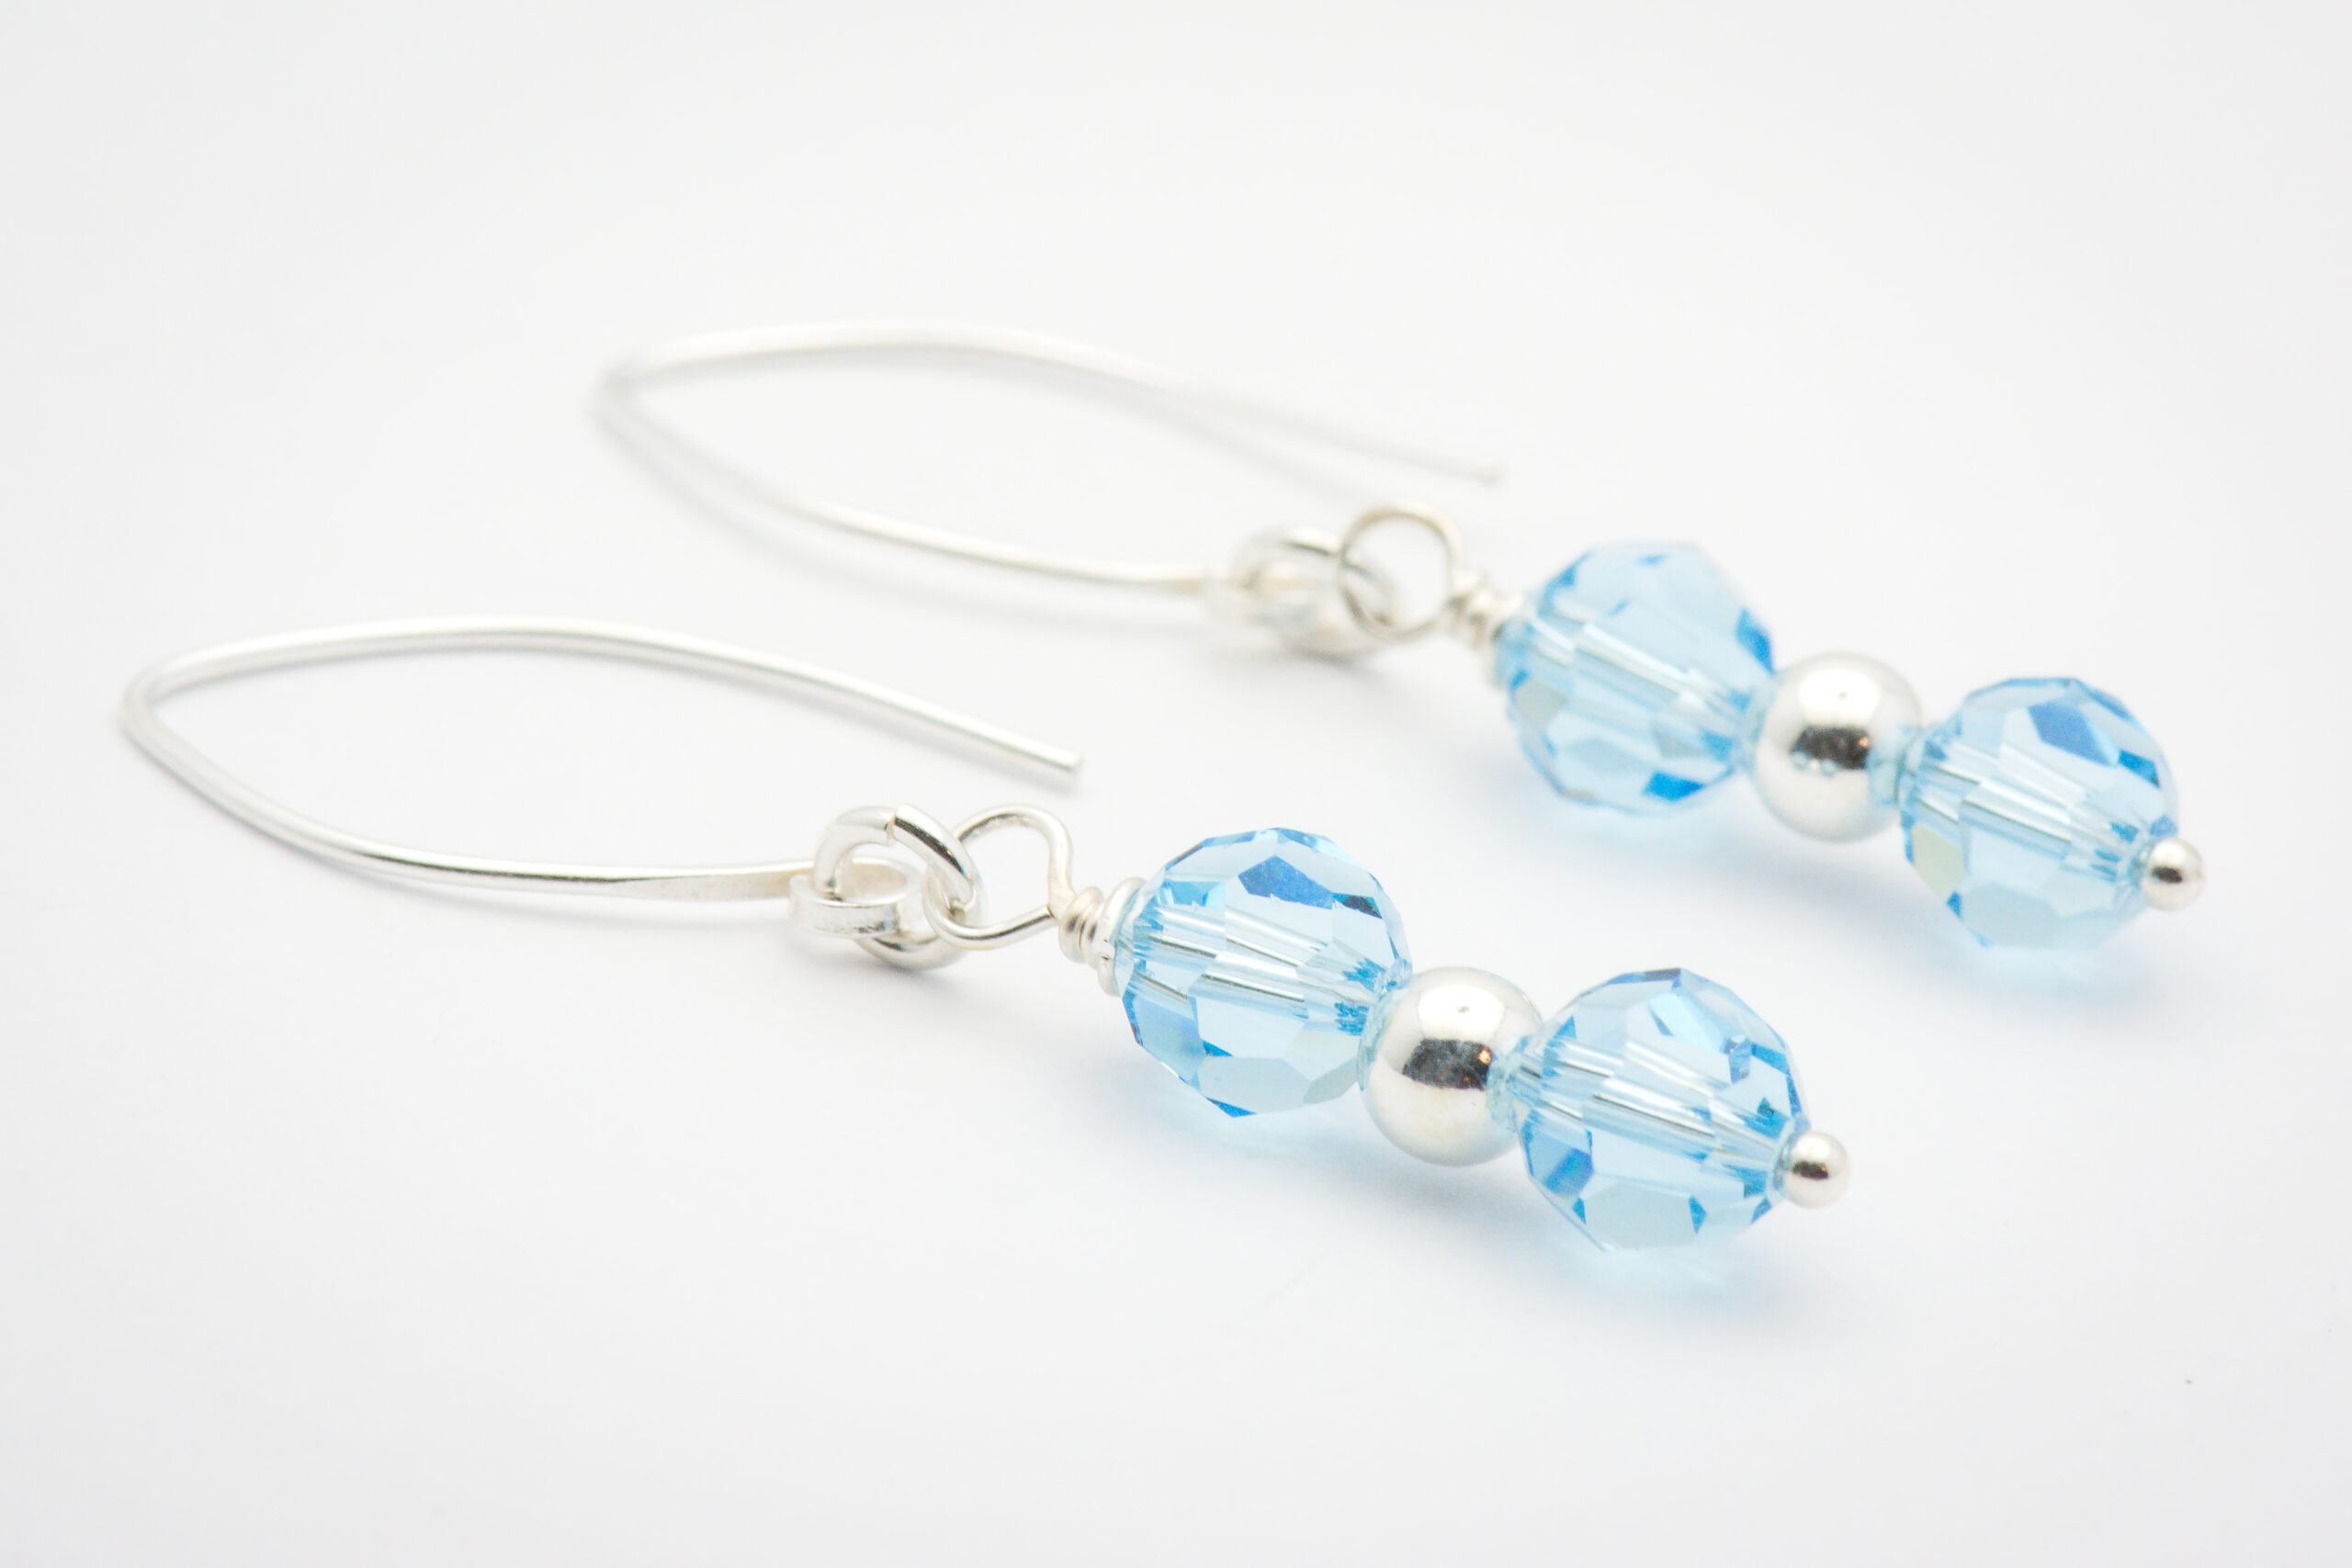 March Swarovski Crystal Earrings